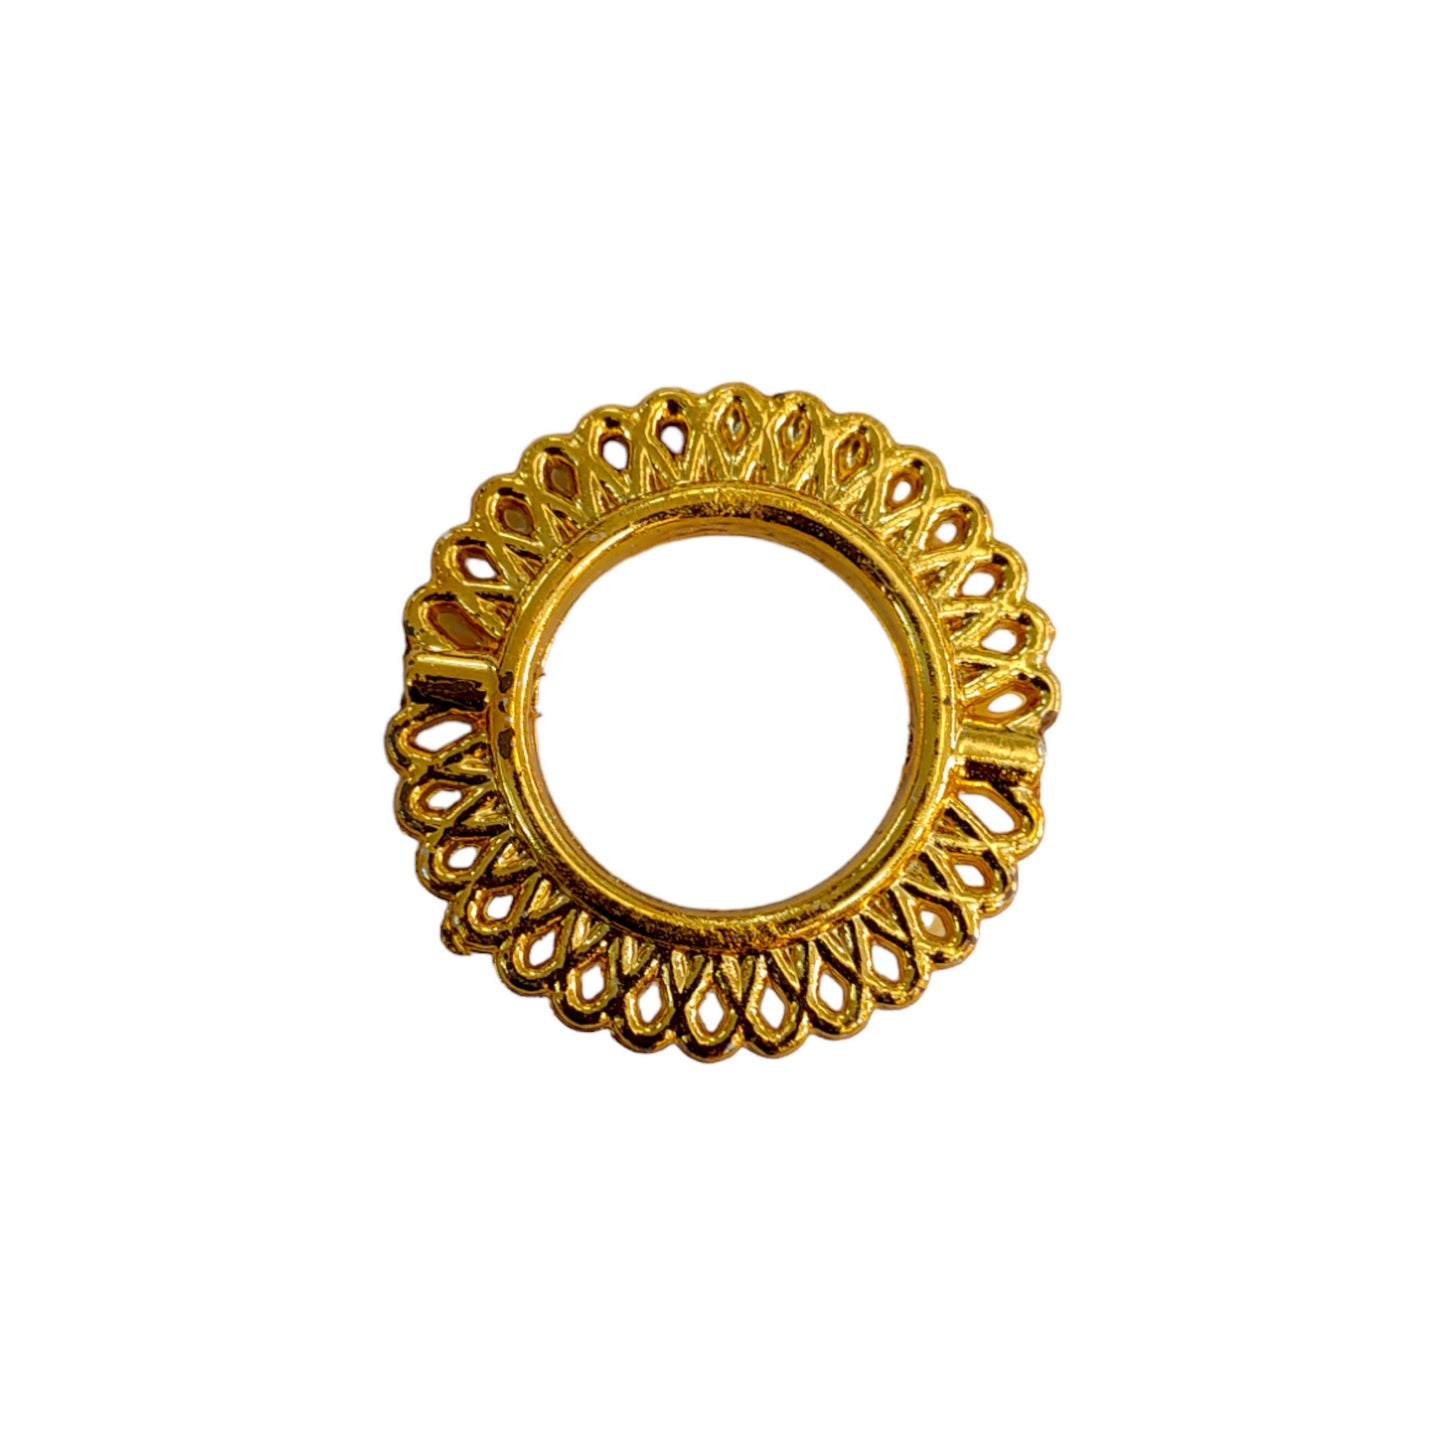 Indian Petals Round Shape CCB Big Round Ring Motif for Rakhi, Jewelry making, Craft or Decor